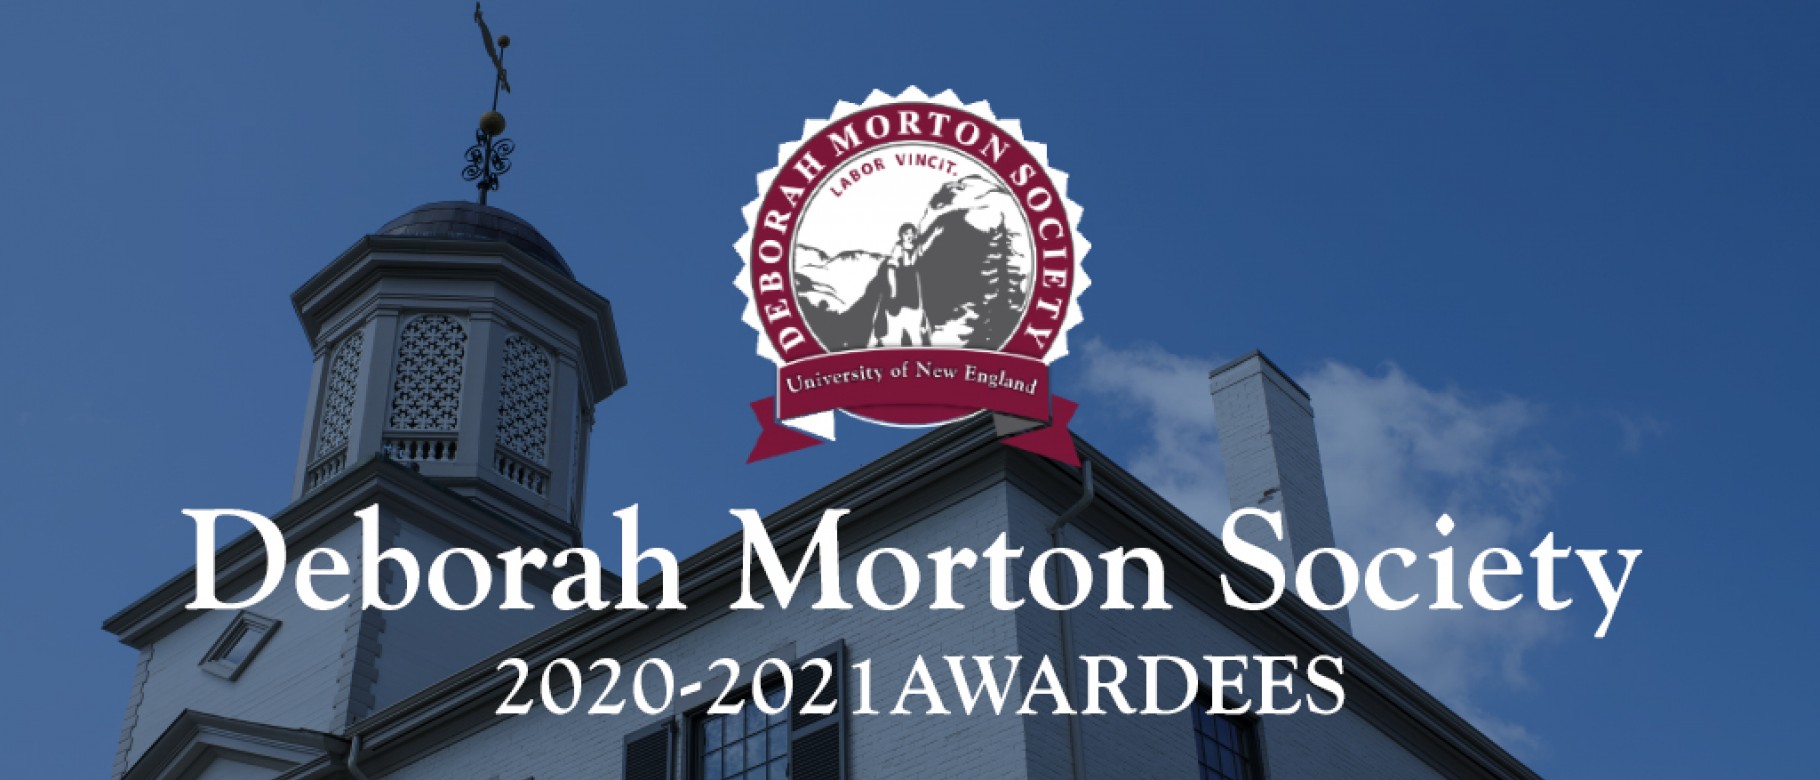 Alumni Hall with Deborah Morton Society logo